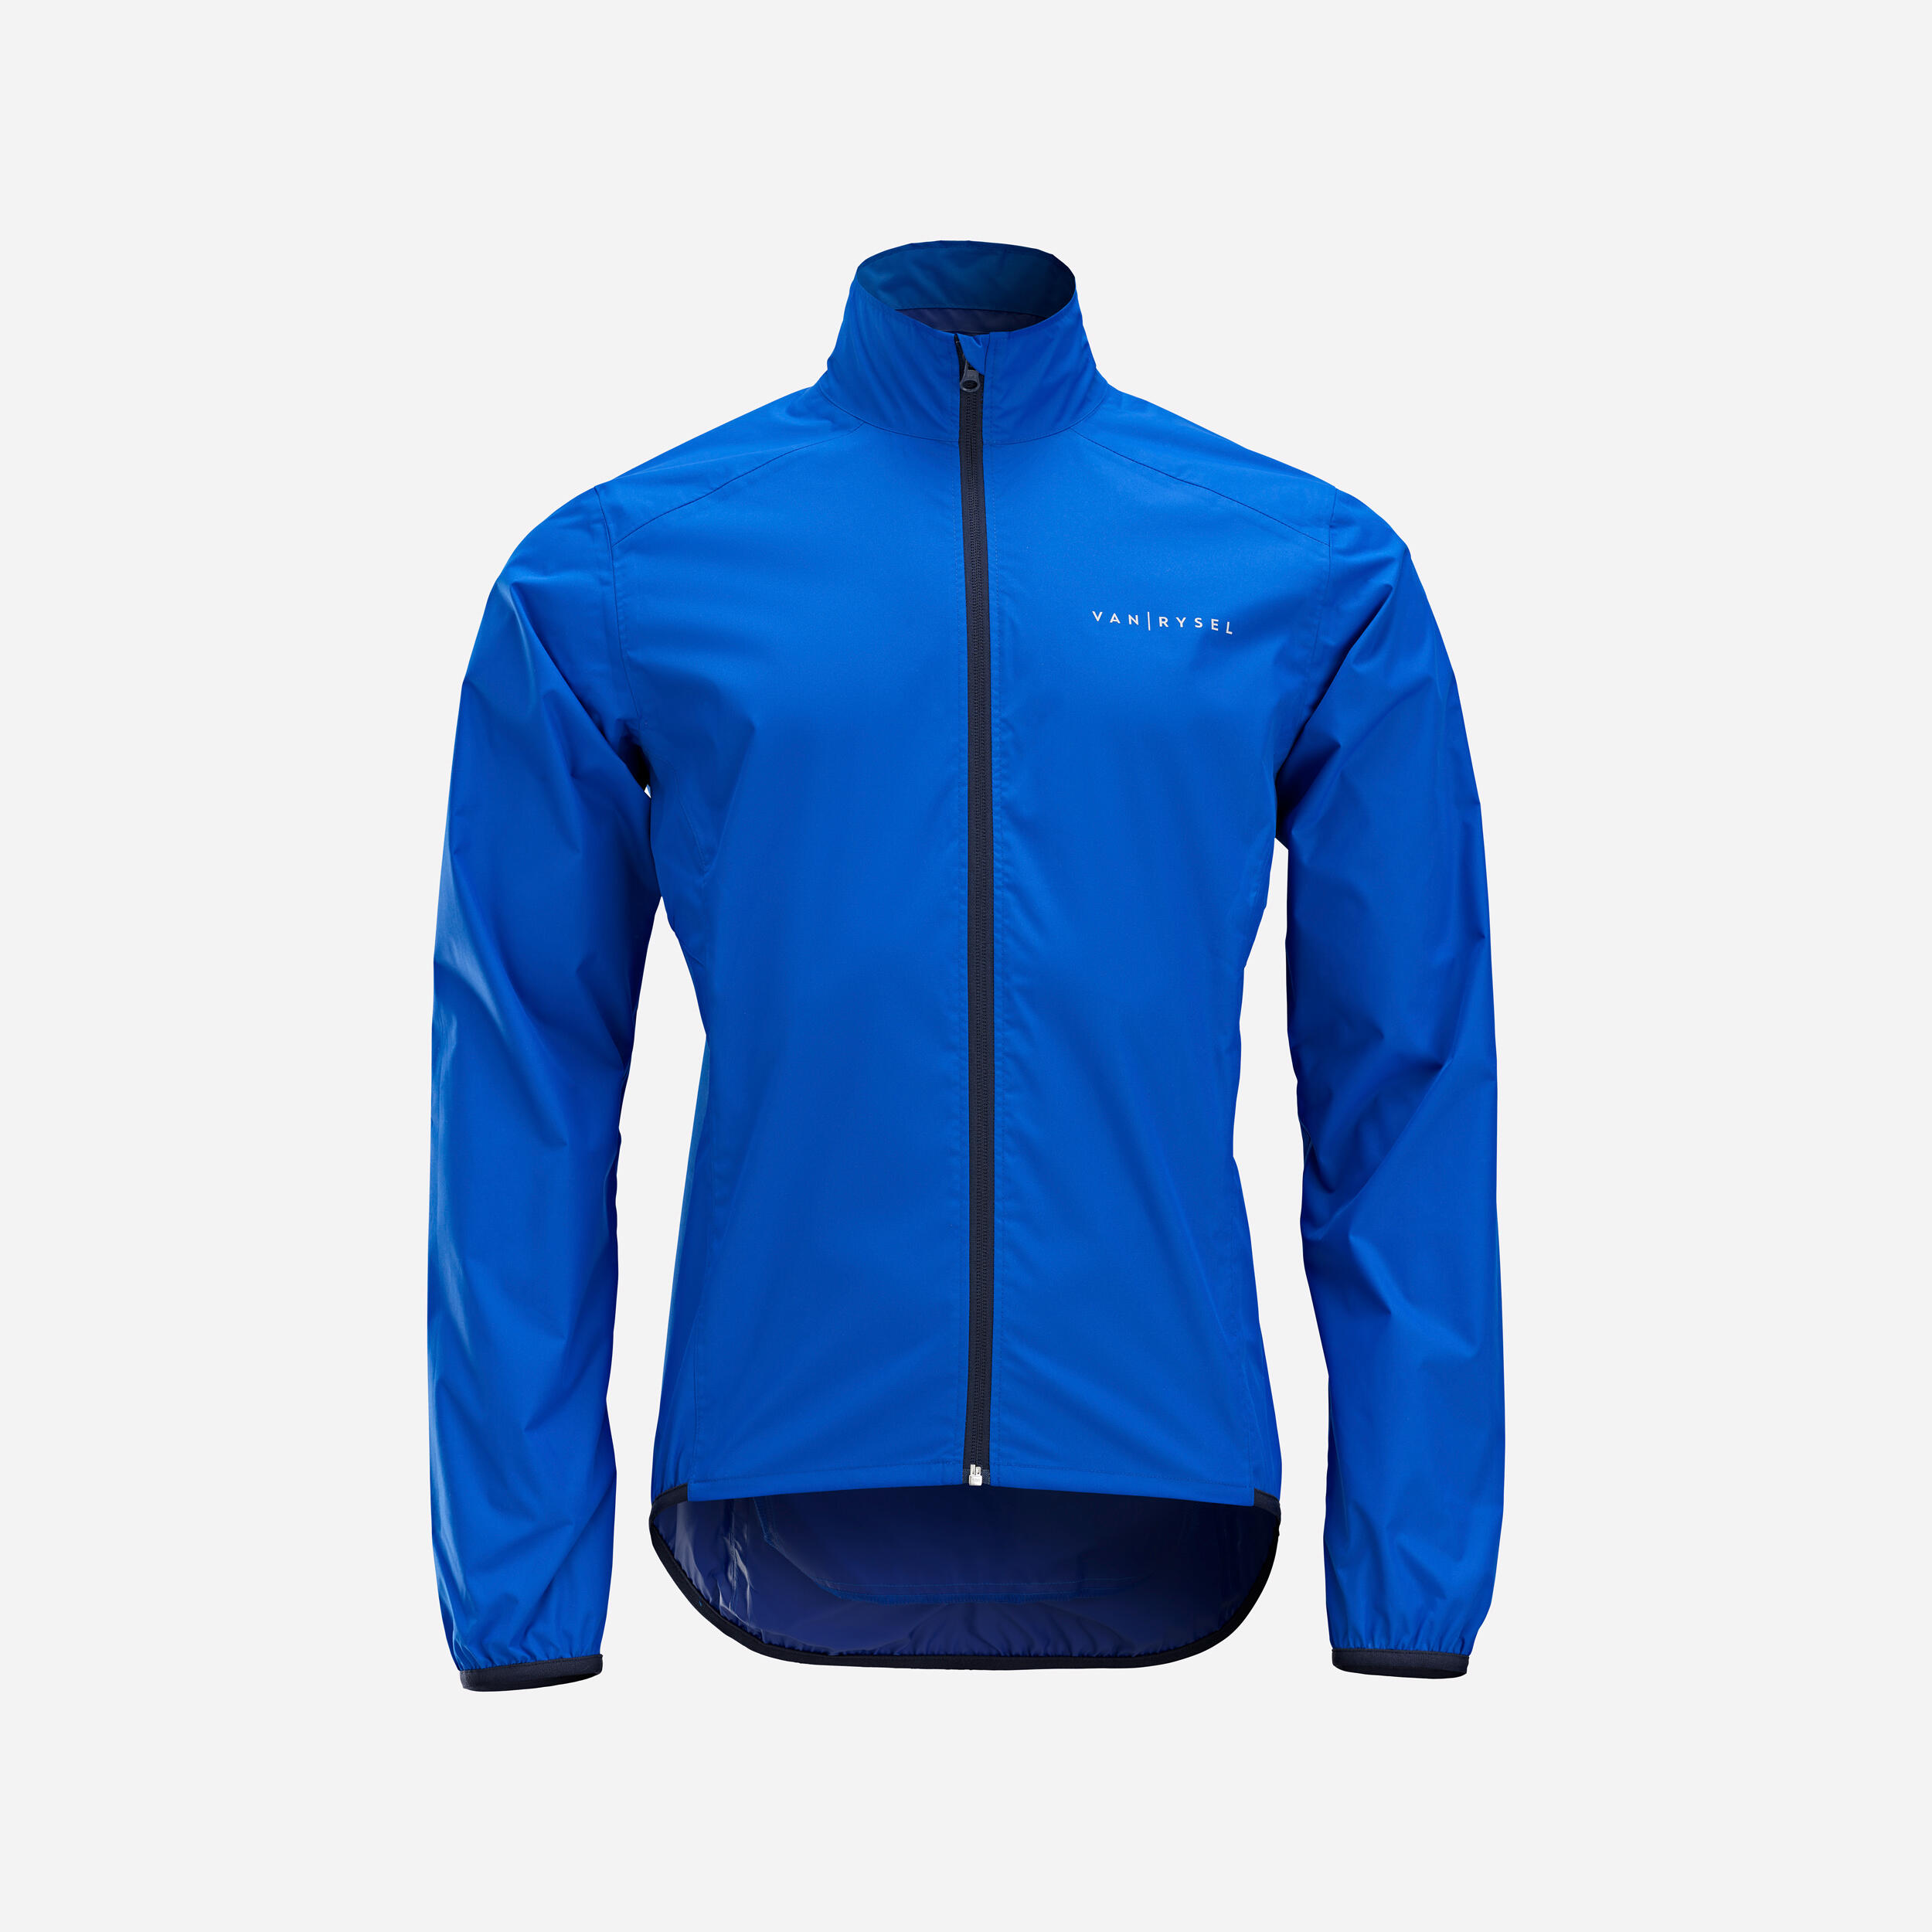 Men's Long-Sleeved Road Cycling Rain Jacket RC100 - Indigo Blue 1/7